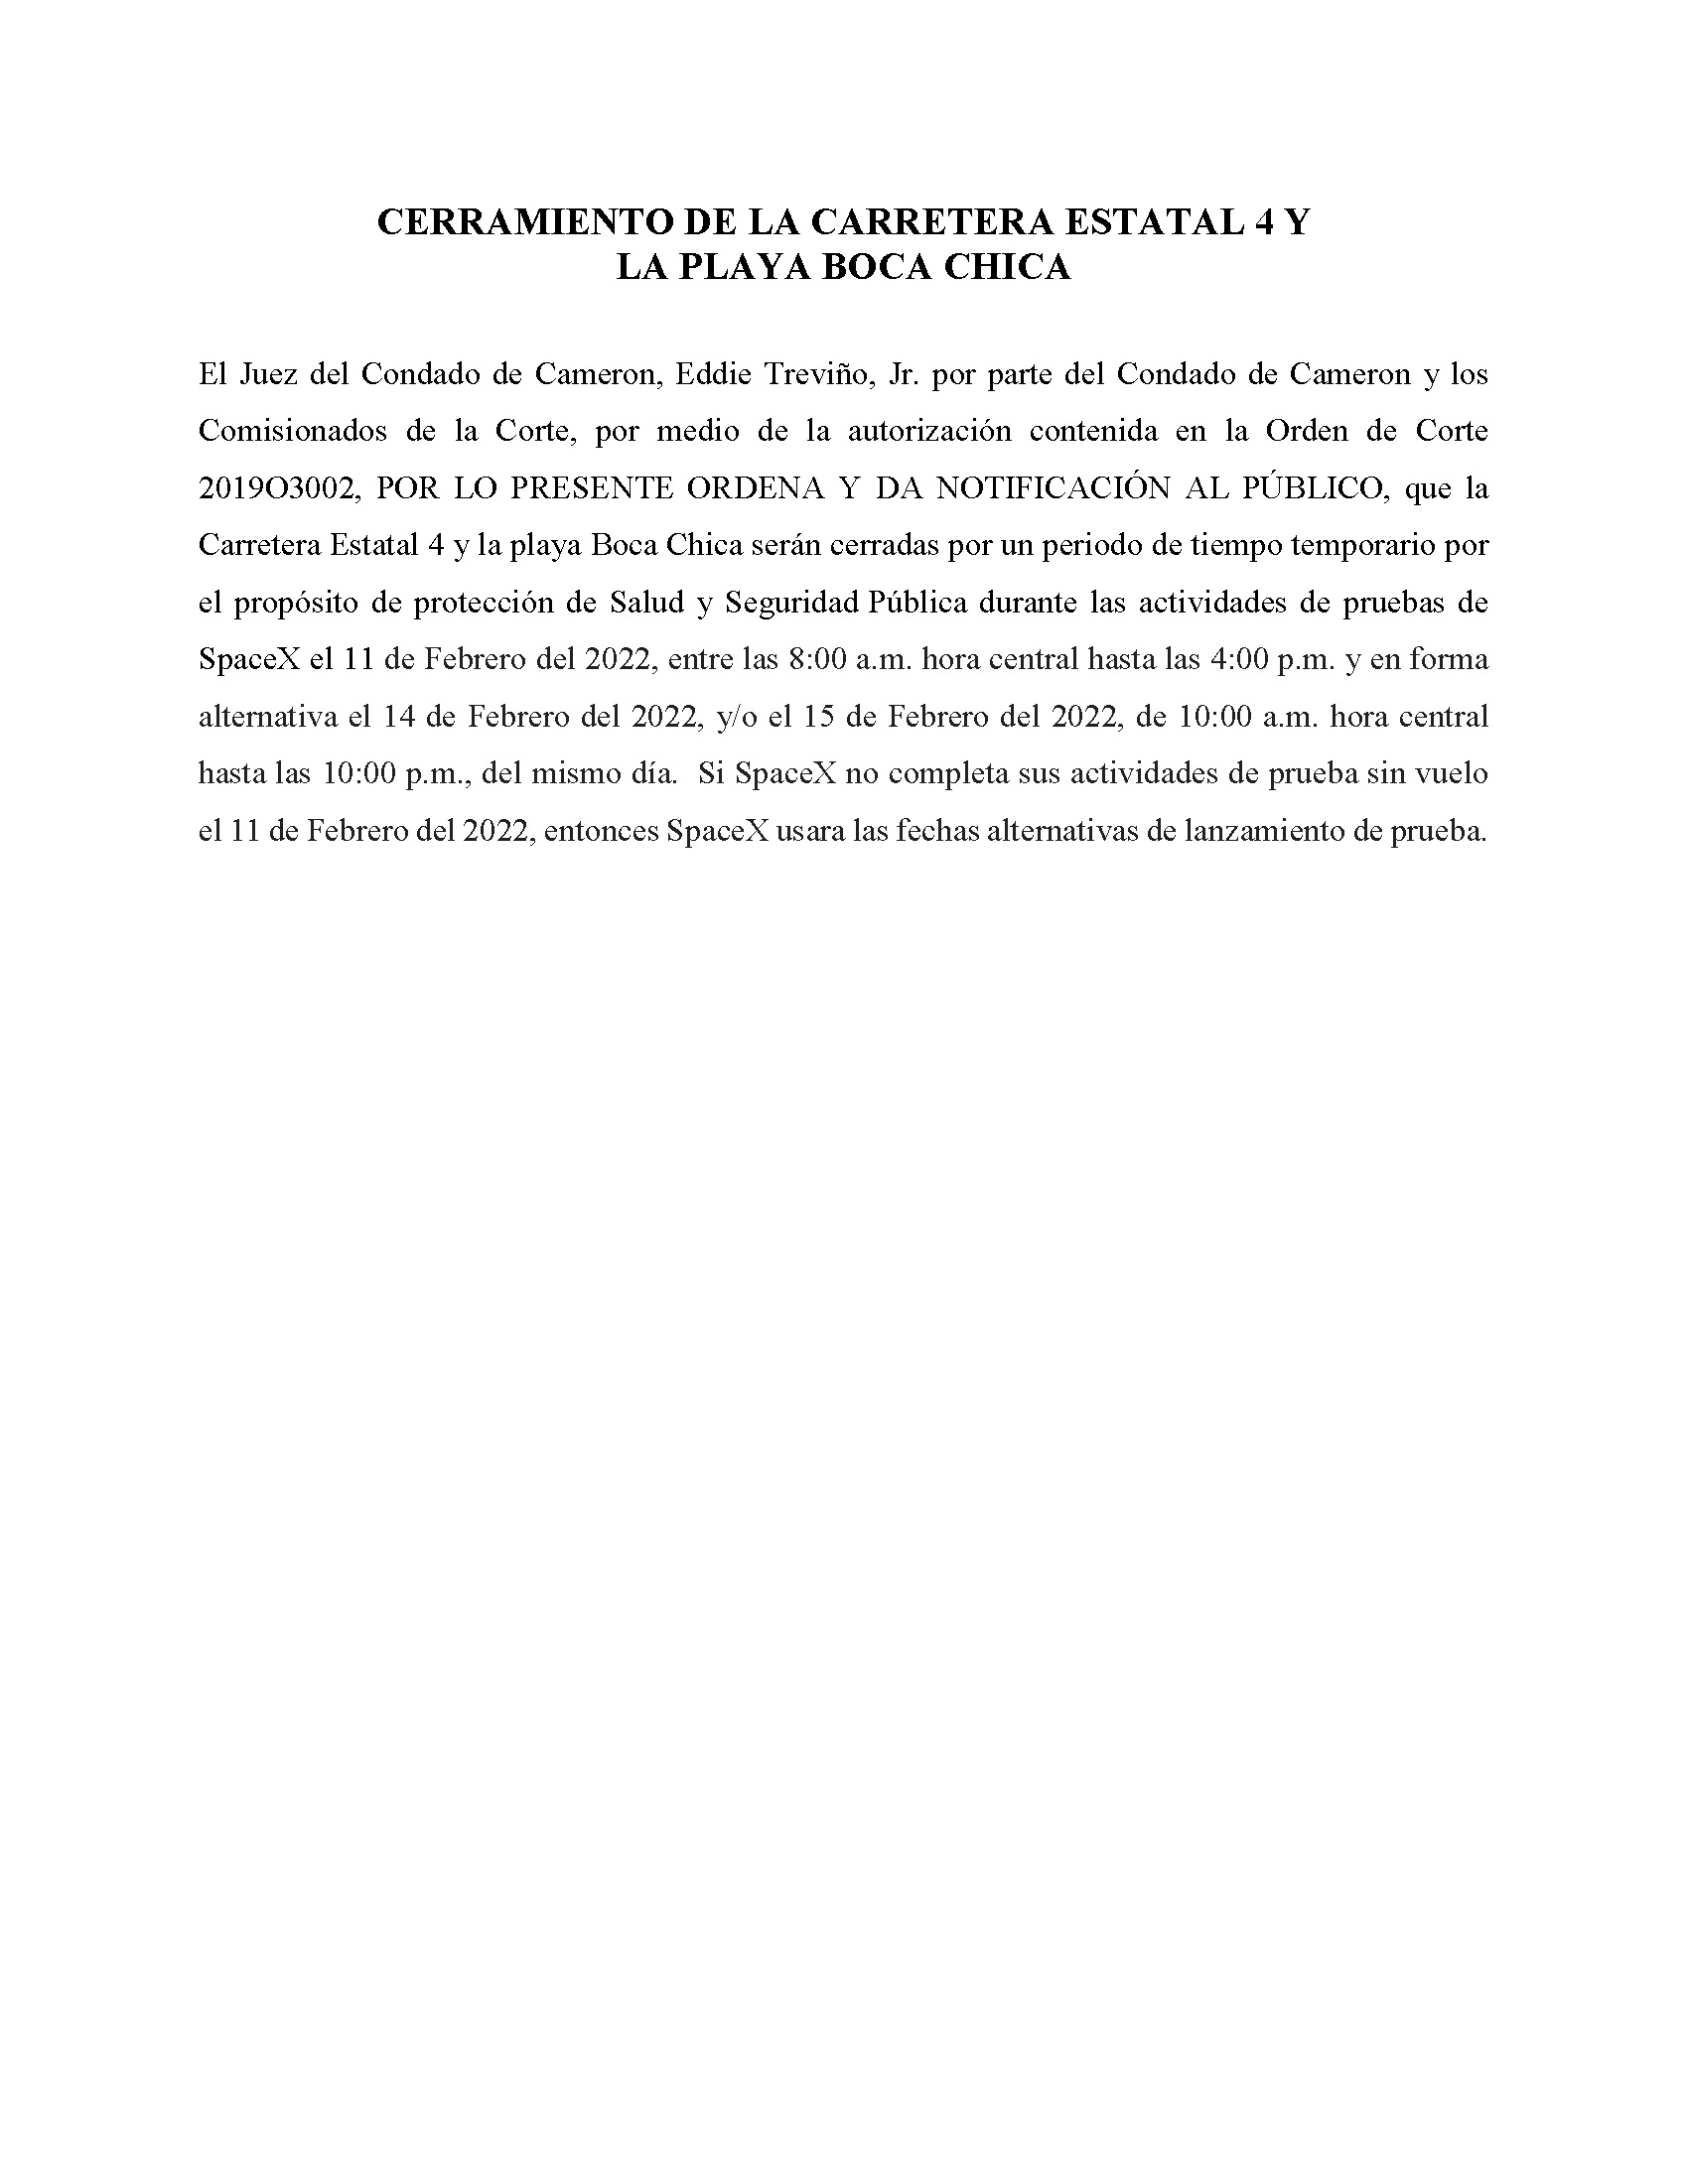 ORDER.CLOSURE OF HIGHWAY 4 Y LA PLAYA BOCA CHICA.SPANISH.02.11.2022